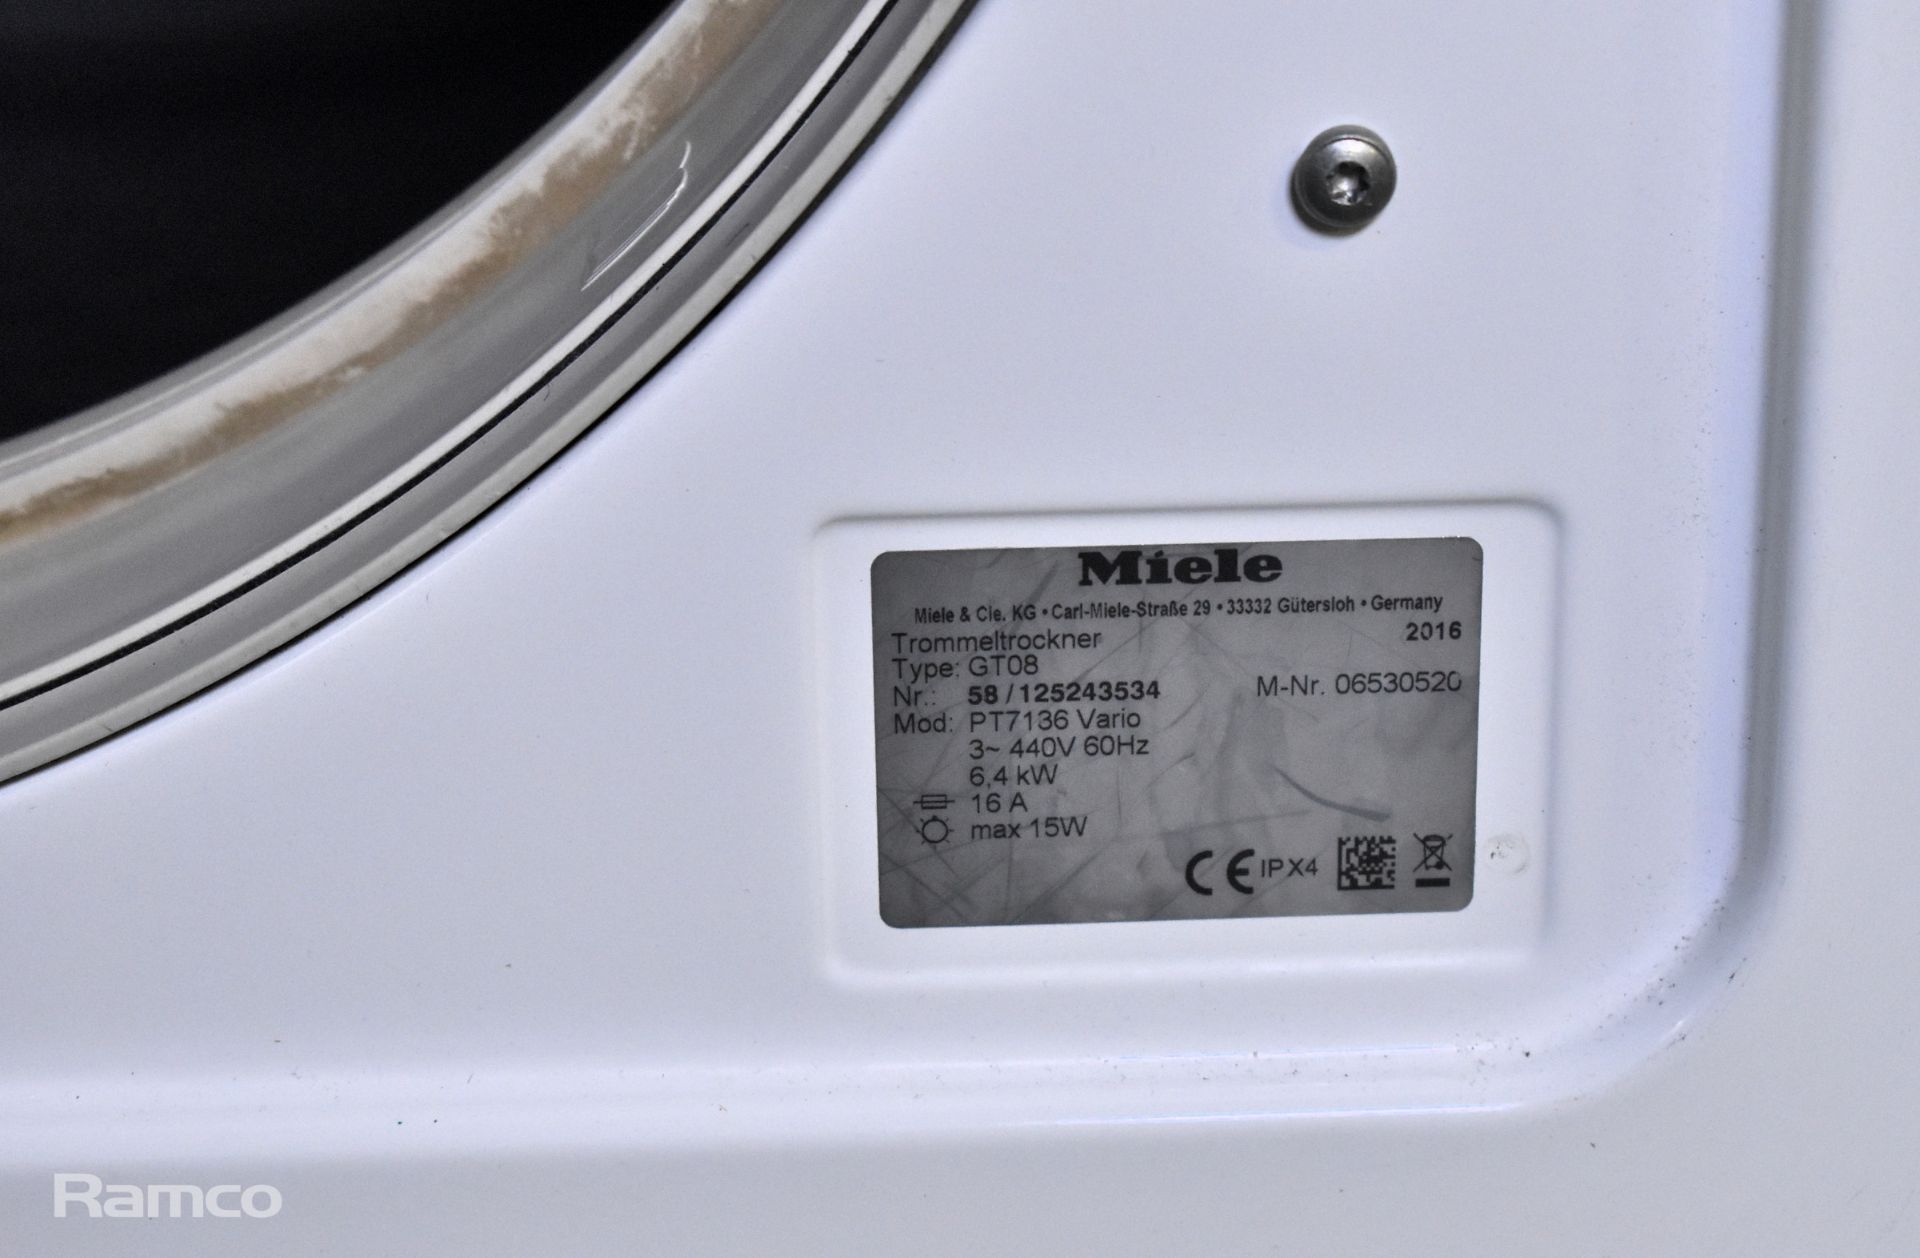 Miele Professional PT 7136 Vario tumble dryer - 400V - W 600 x D 700 x H 850mm - Image 4 of 5